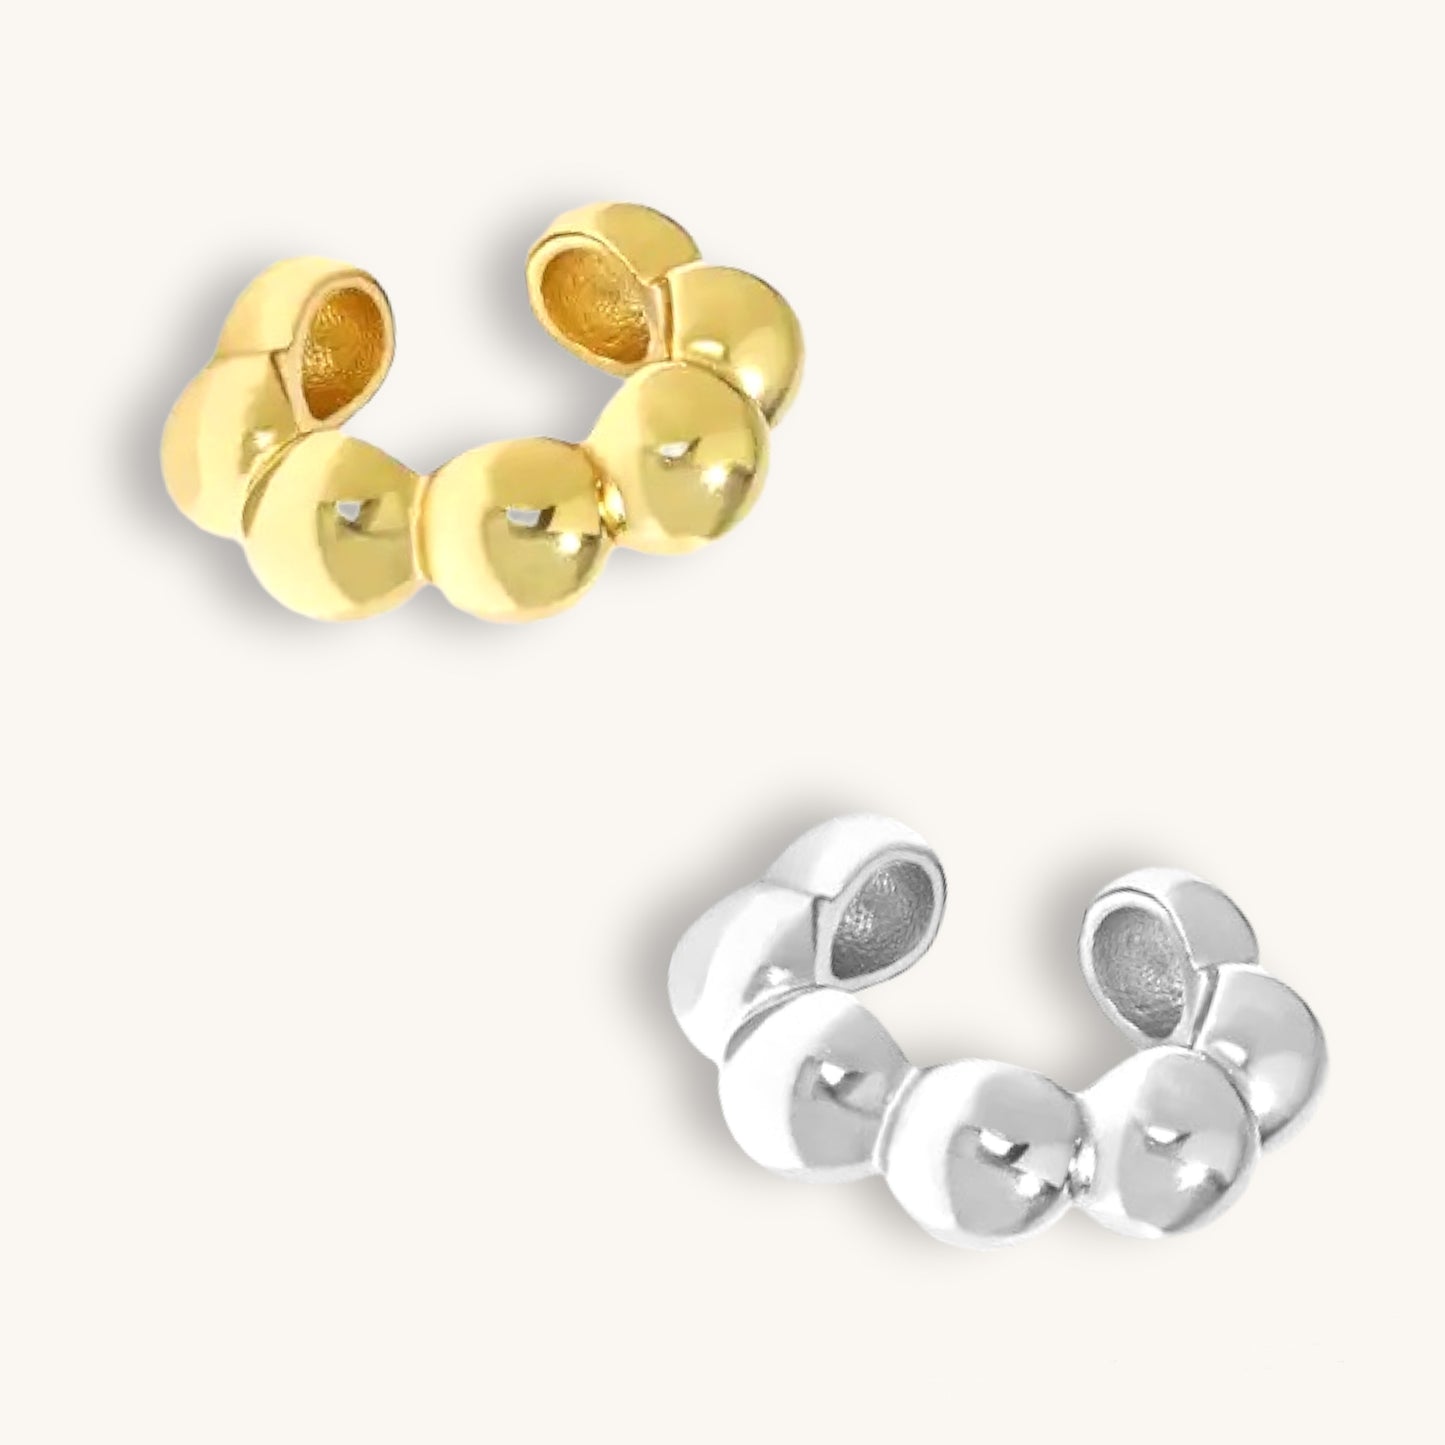 BOBA - Beaded Earcuff in 925 Sterling Silver or Gold ∙ Ball Shape Earrings